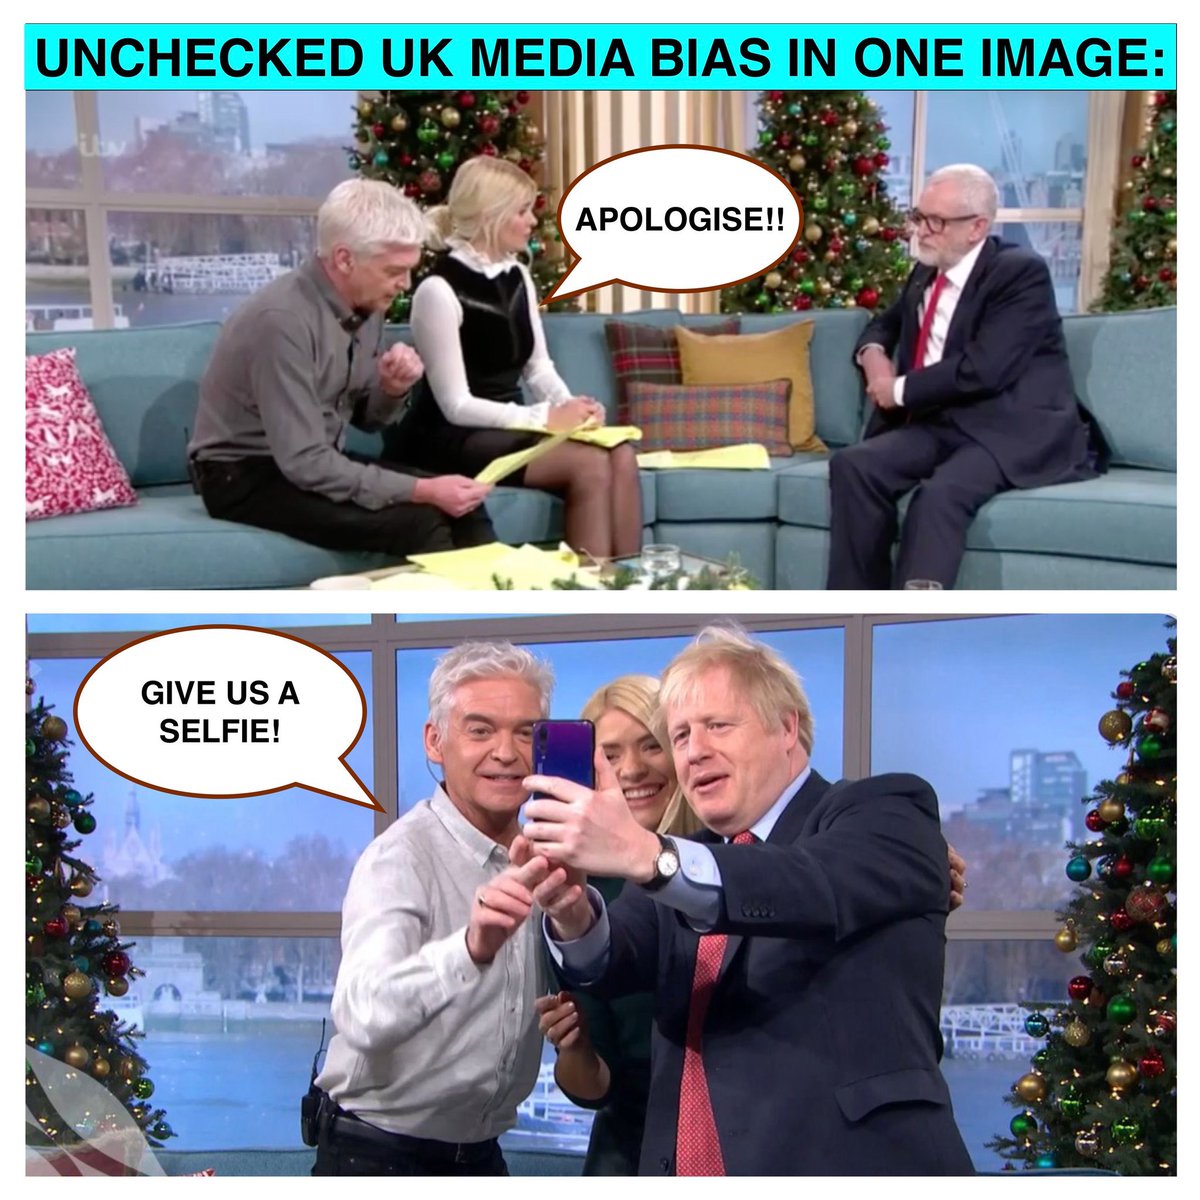 The British Media’s Bias In One Image.